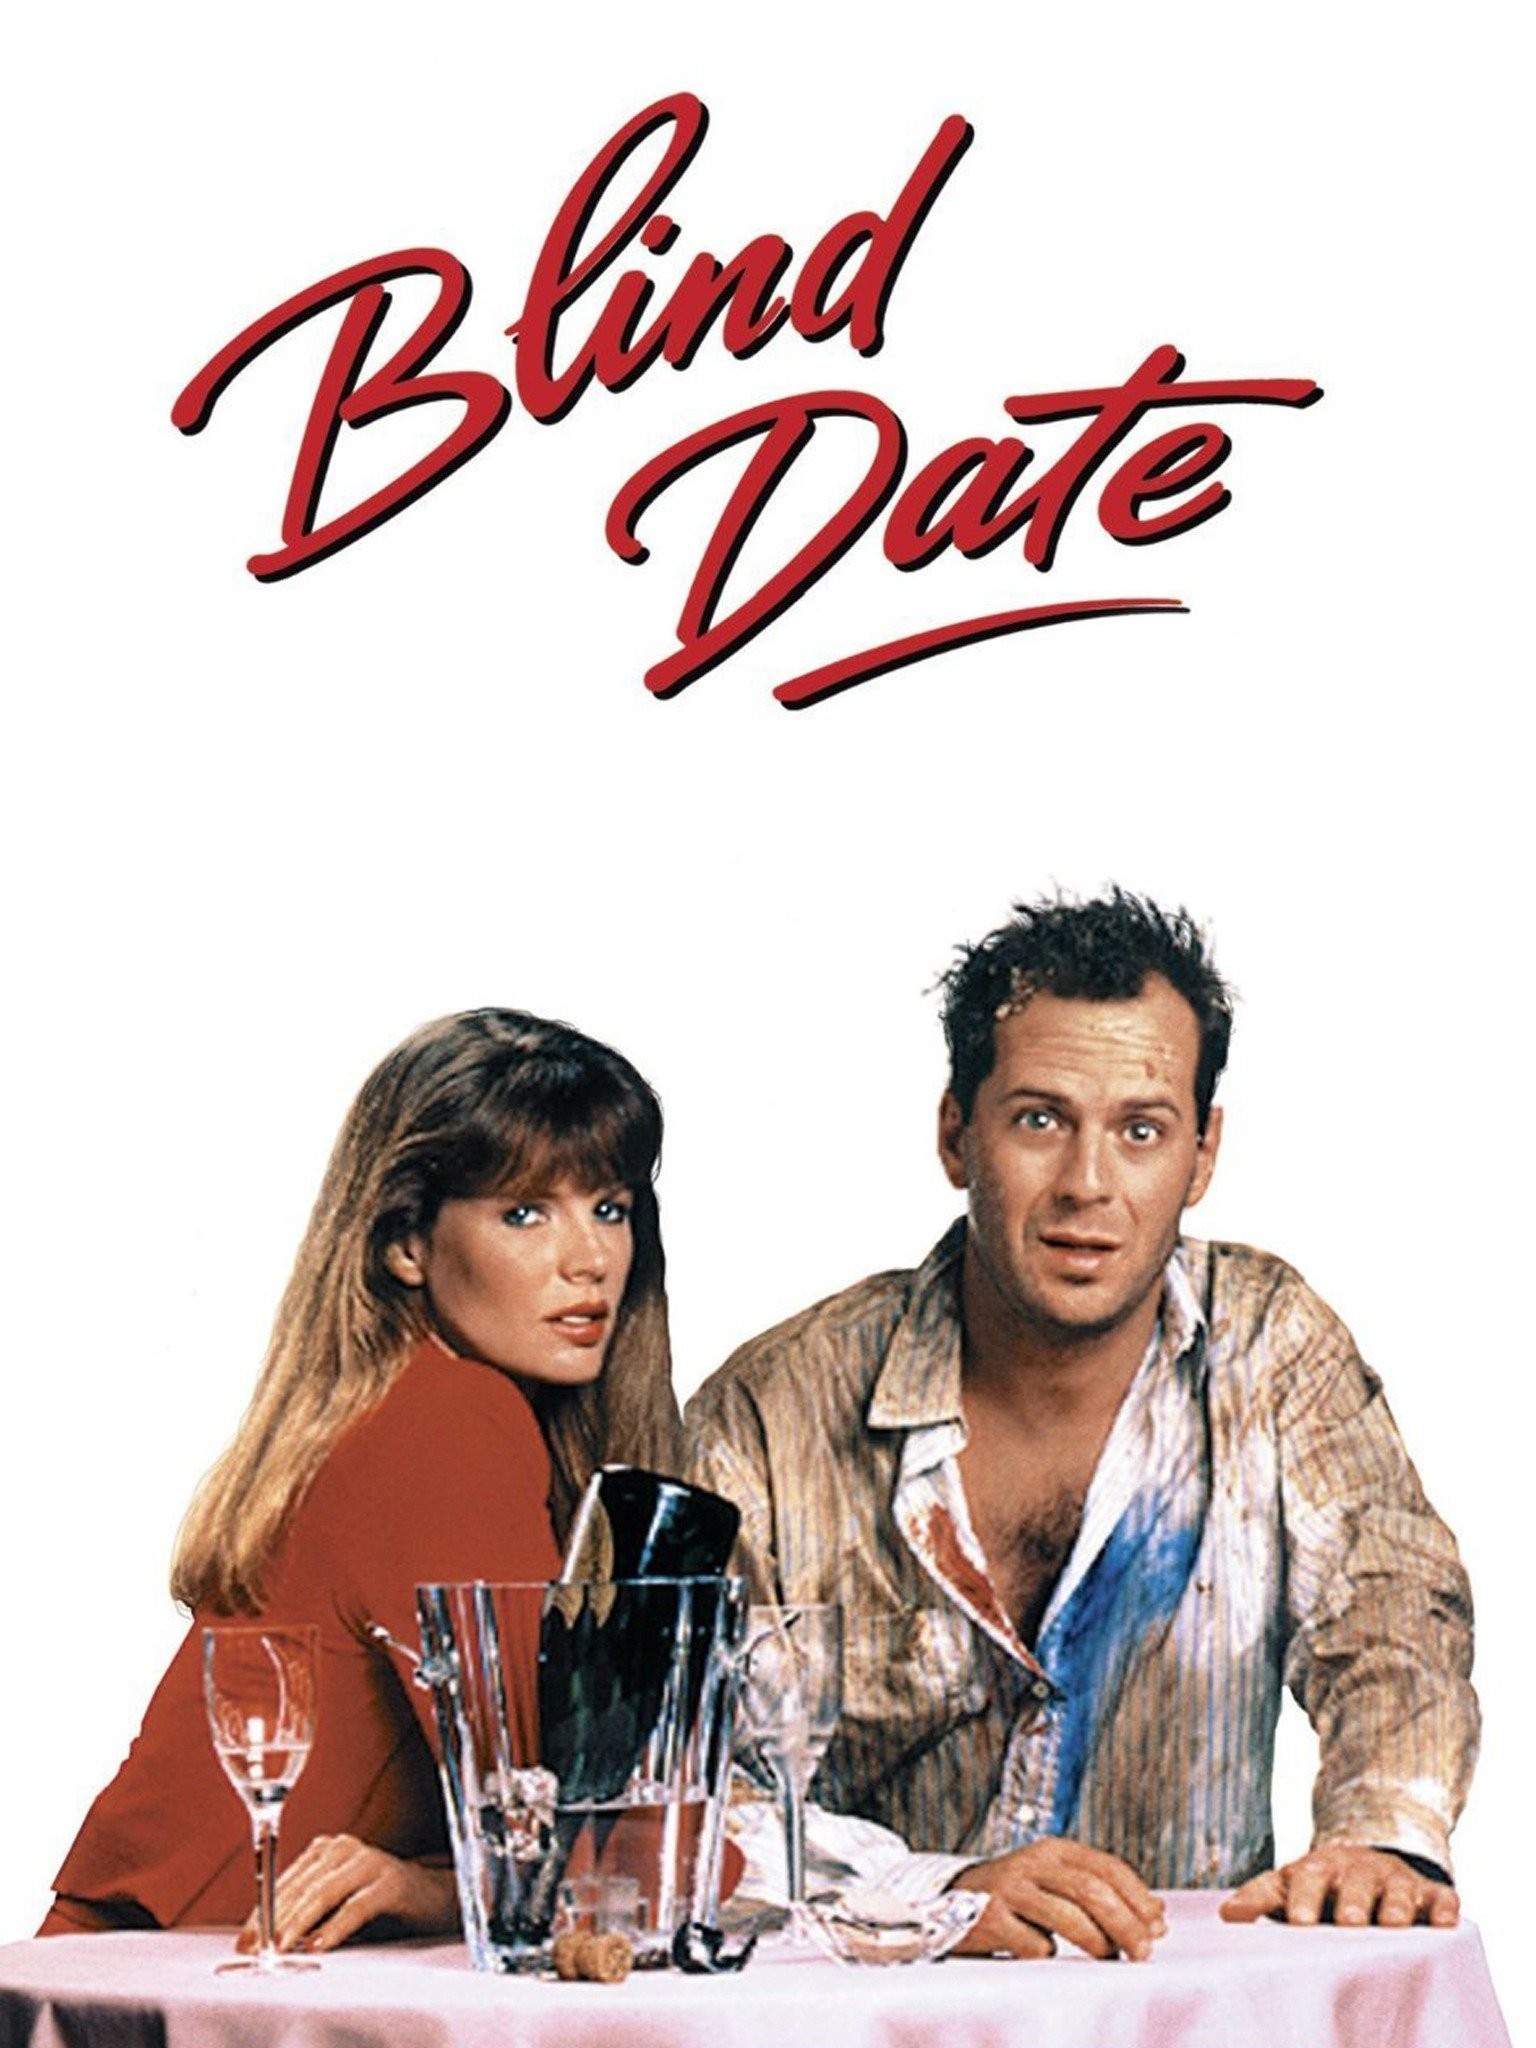 Blind Date (American TV series) - Wikipedia